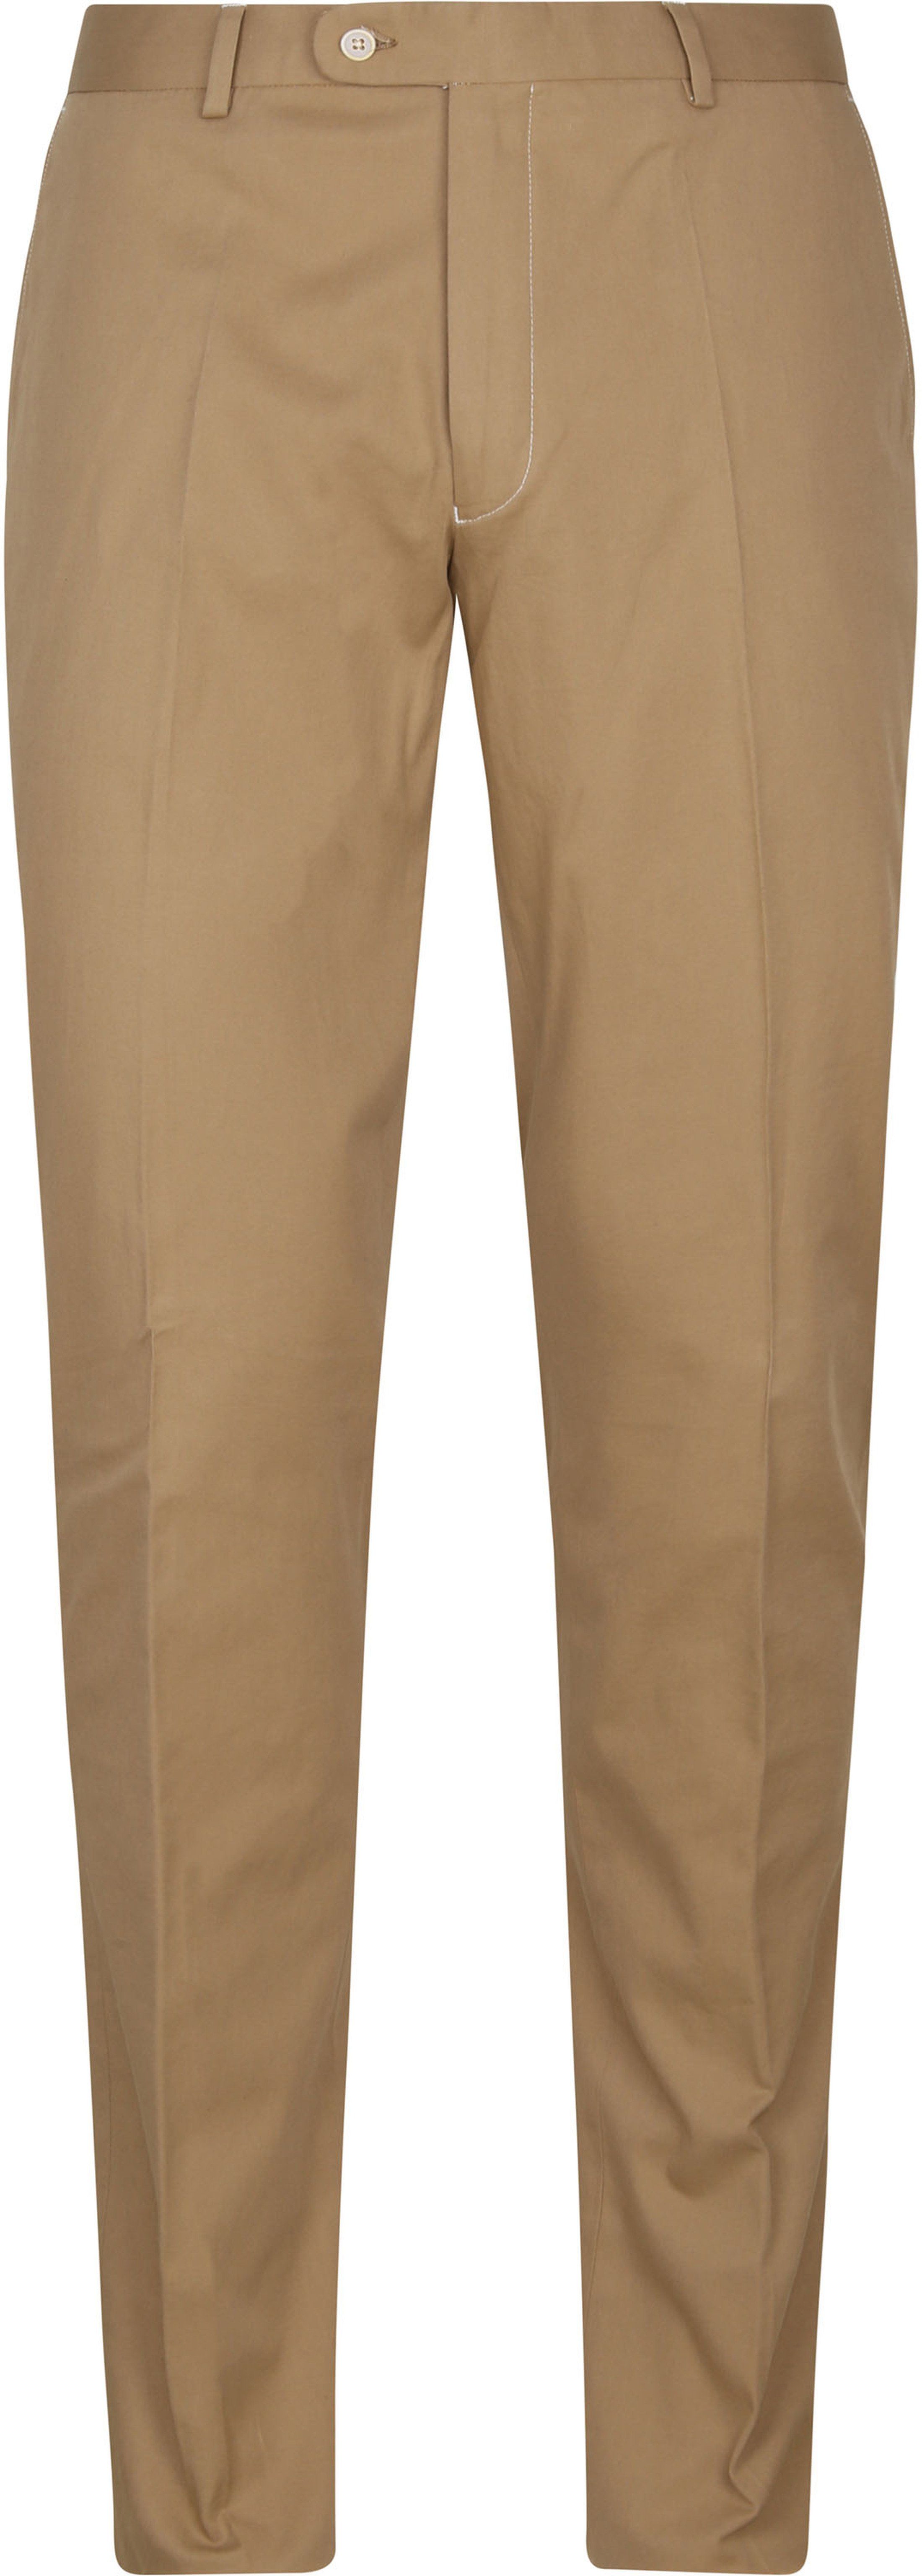 Suitable Pantalon Algodao Khaki size 36-R